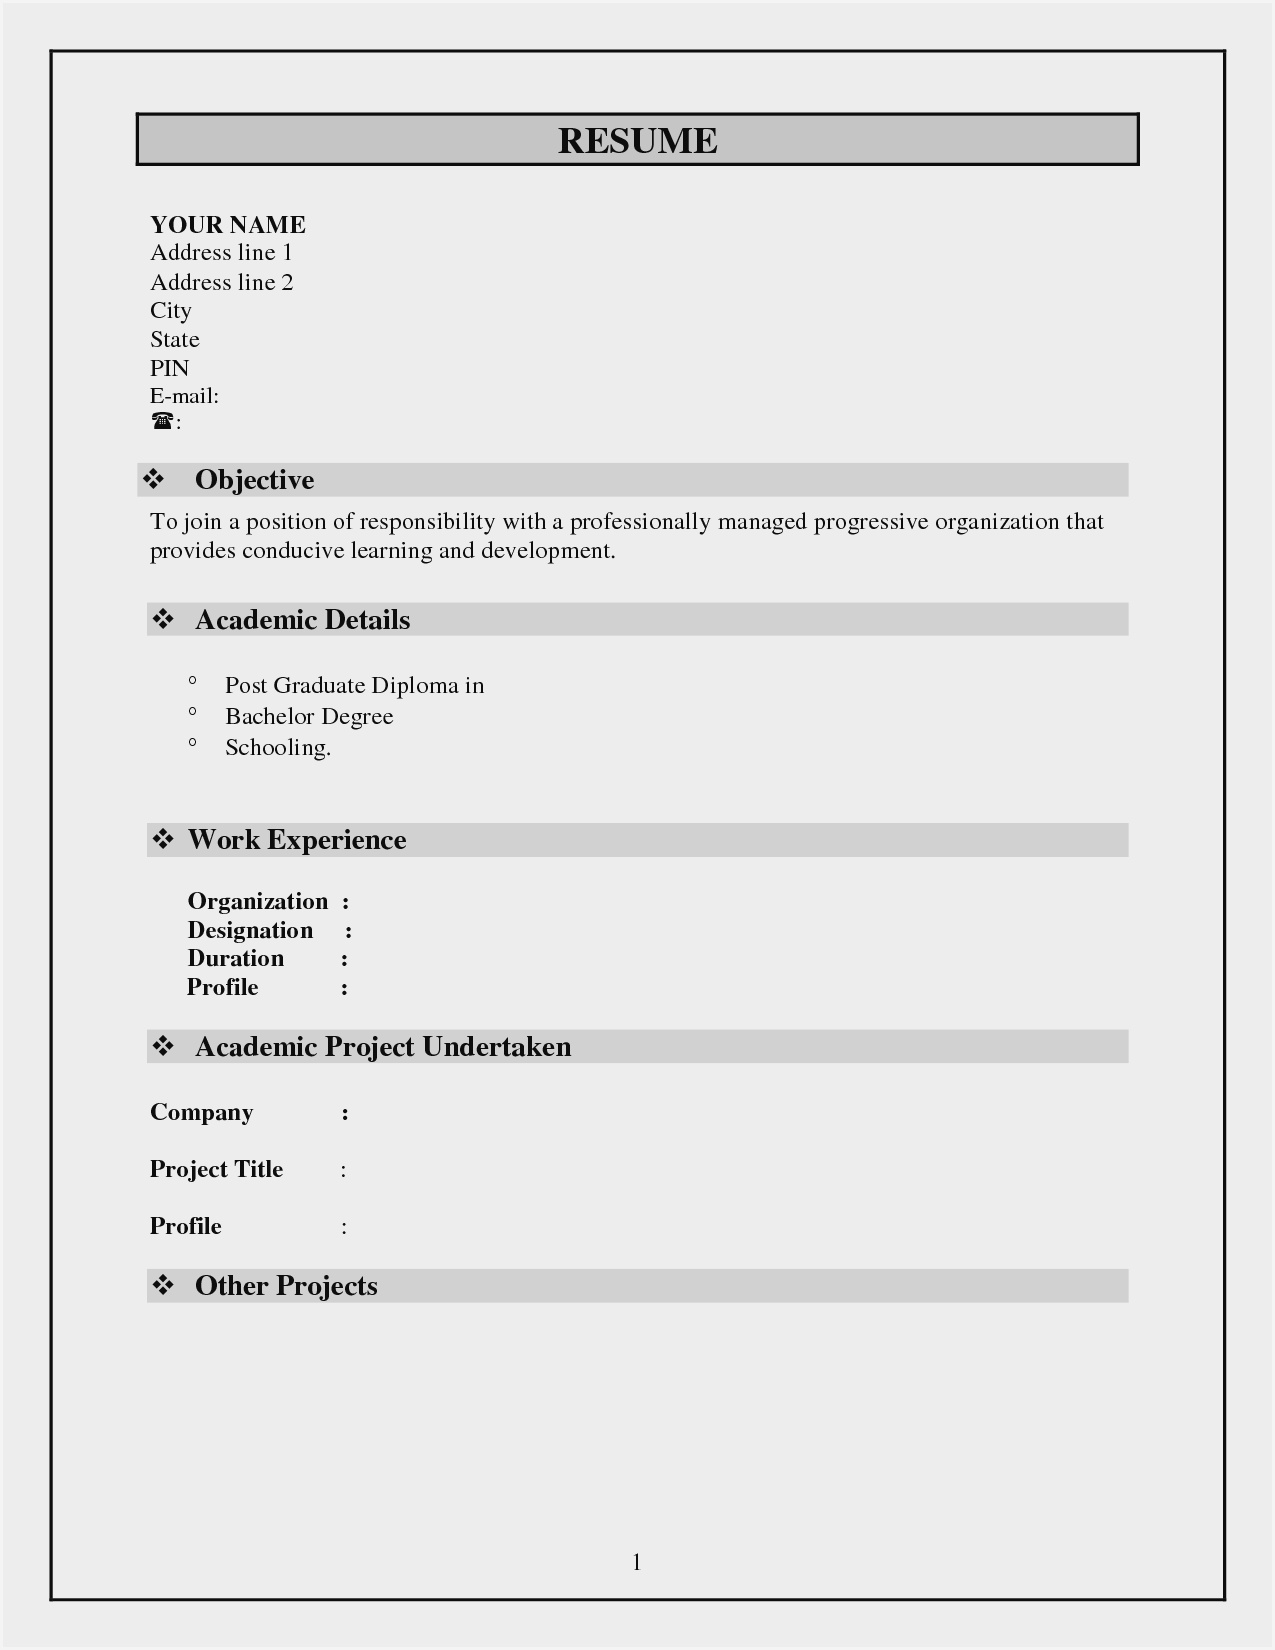 Blank Resume Format Pdf Free Download - Resume : Resume Pertaining To Free Blank Resume Templates For Microsoft Word